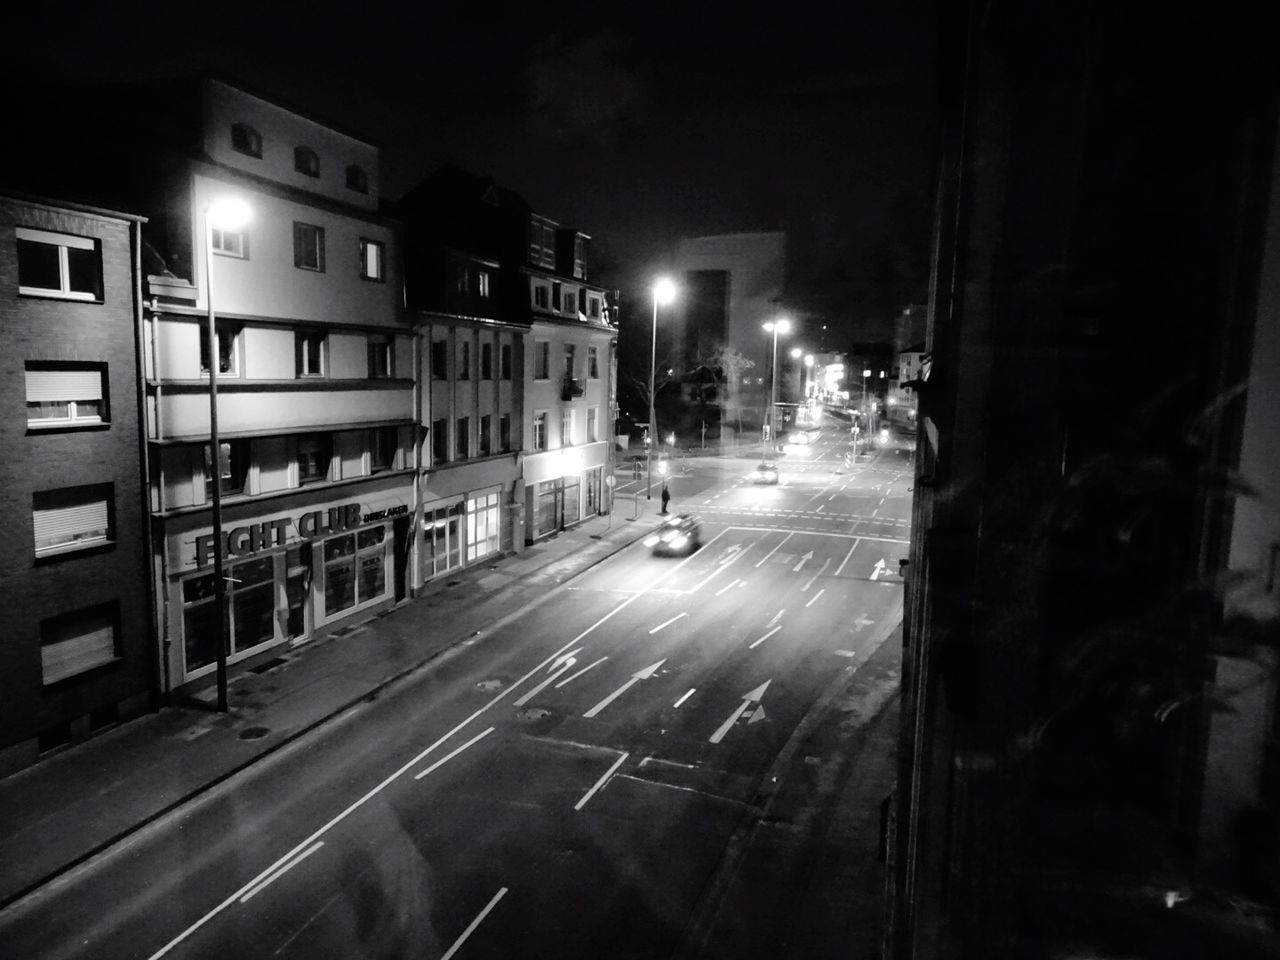 VIEW OF ILLUMINATED STREET LIGHT AT NIGHT